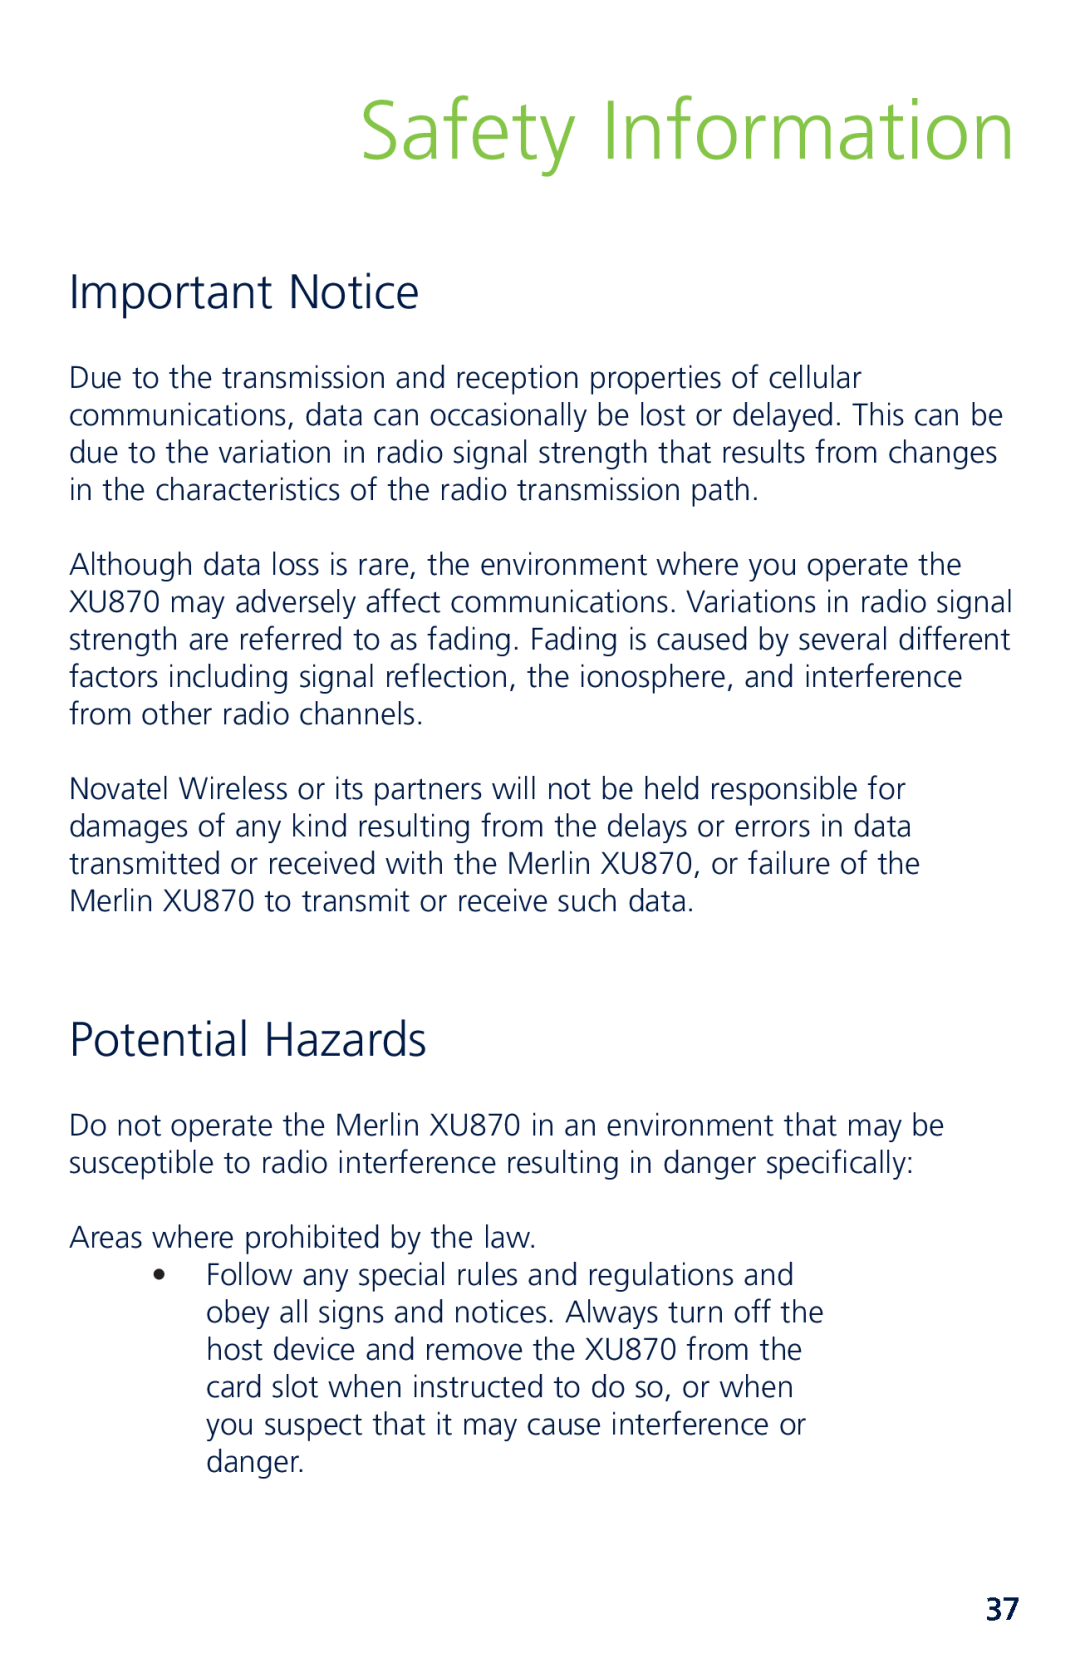 Novatel XU870 manual Safety Information, Important Notice, Potential Hazards 